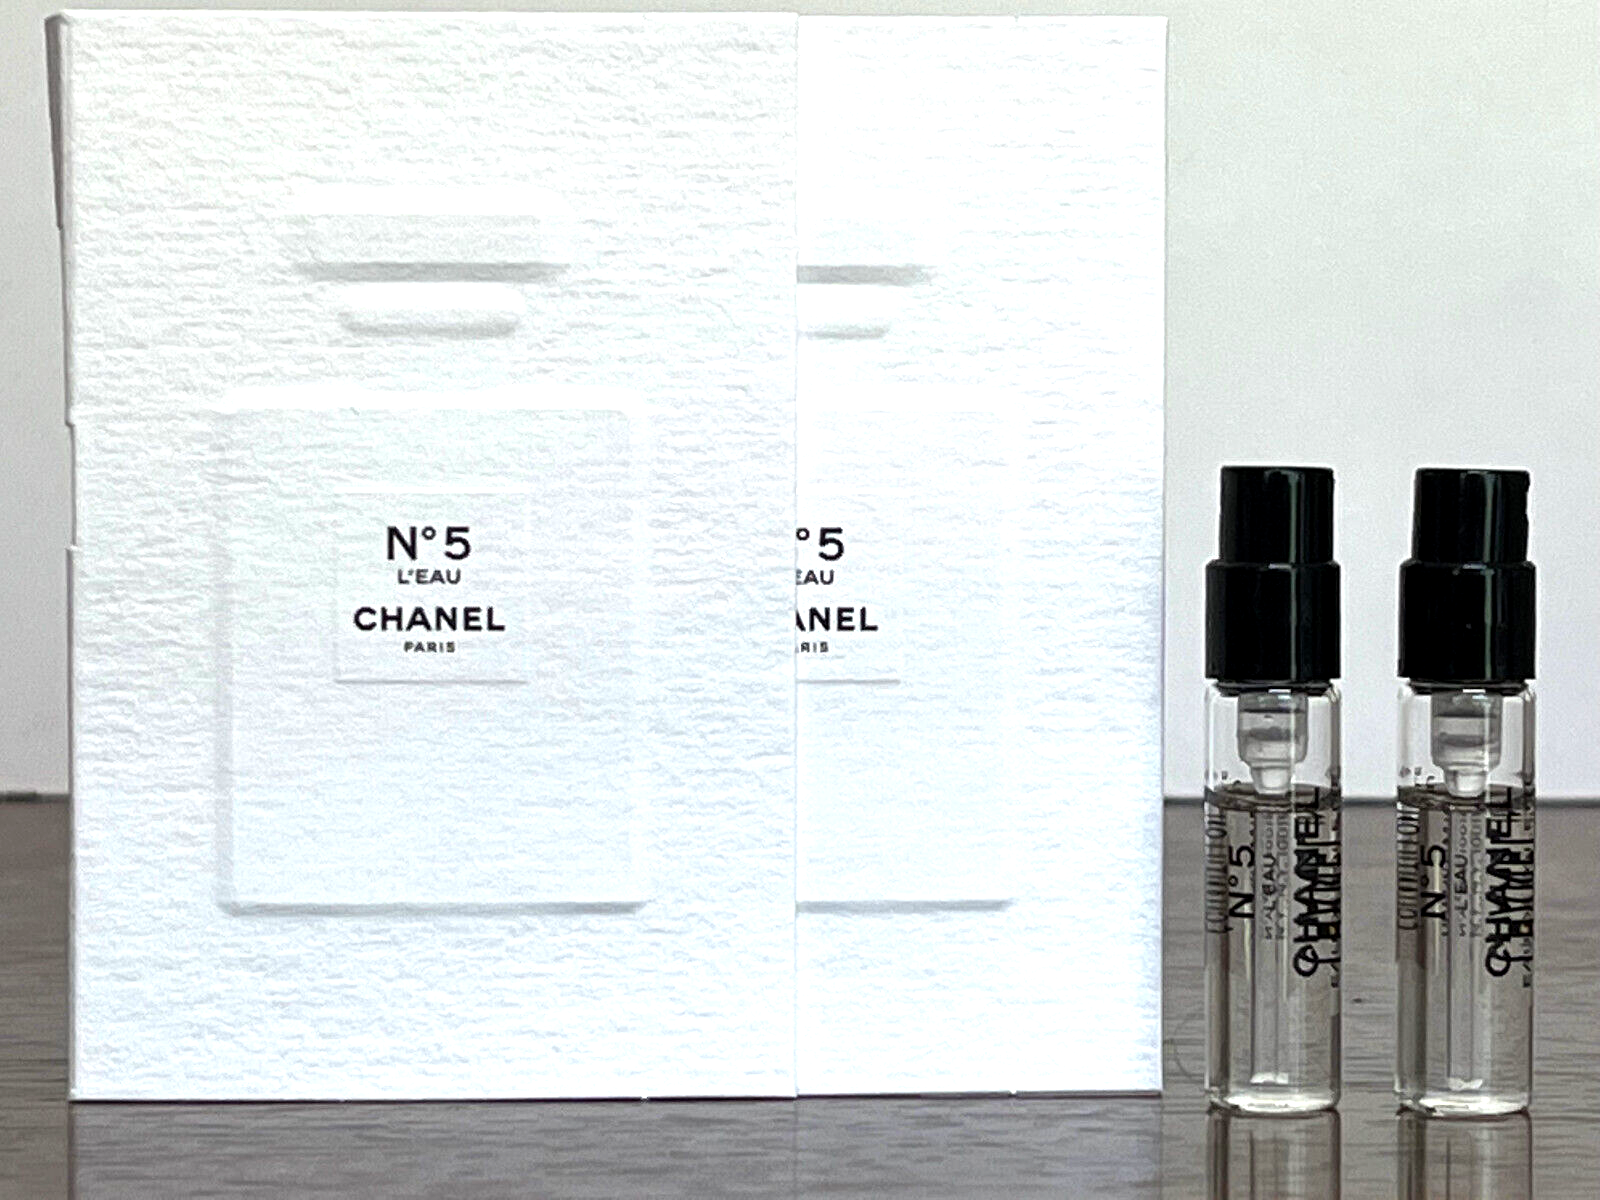 2x CHANEL N° 5 L'EAU EDT Spray Perfume Samples 0.05oz / 1.5ml EACH NEW  ON CARD